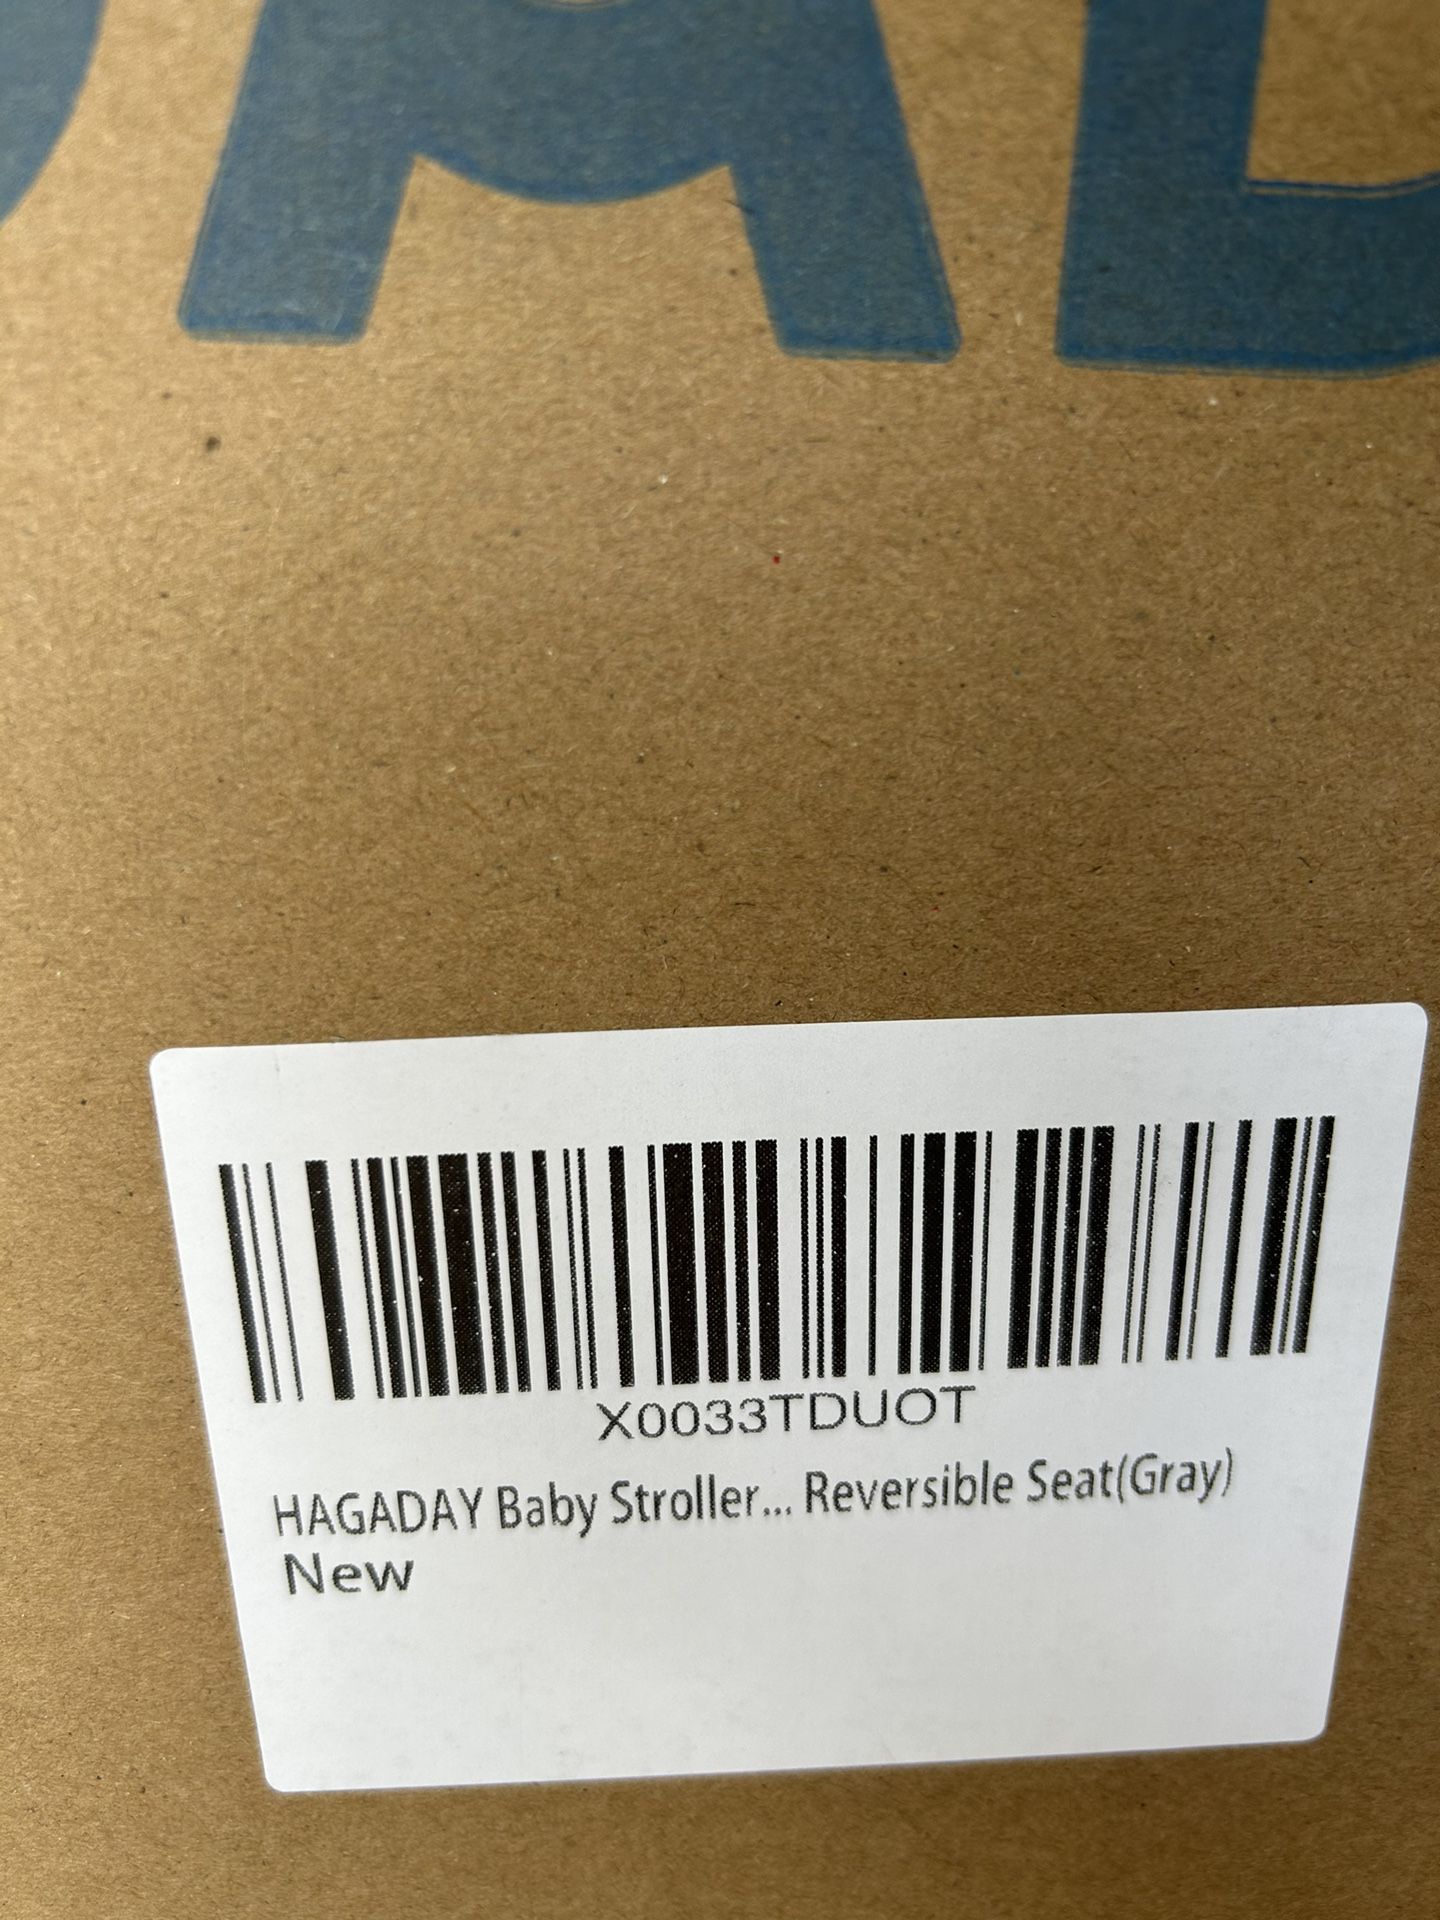 Hagaday Baby Stroller Brand New 